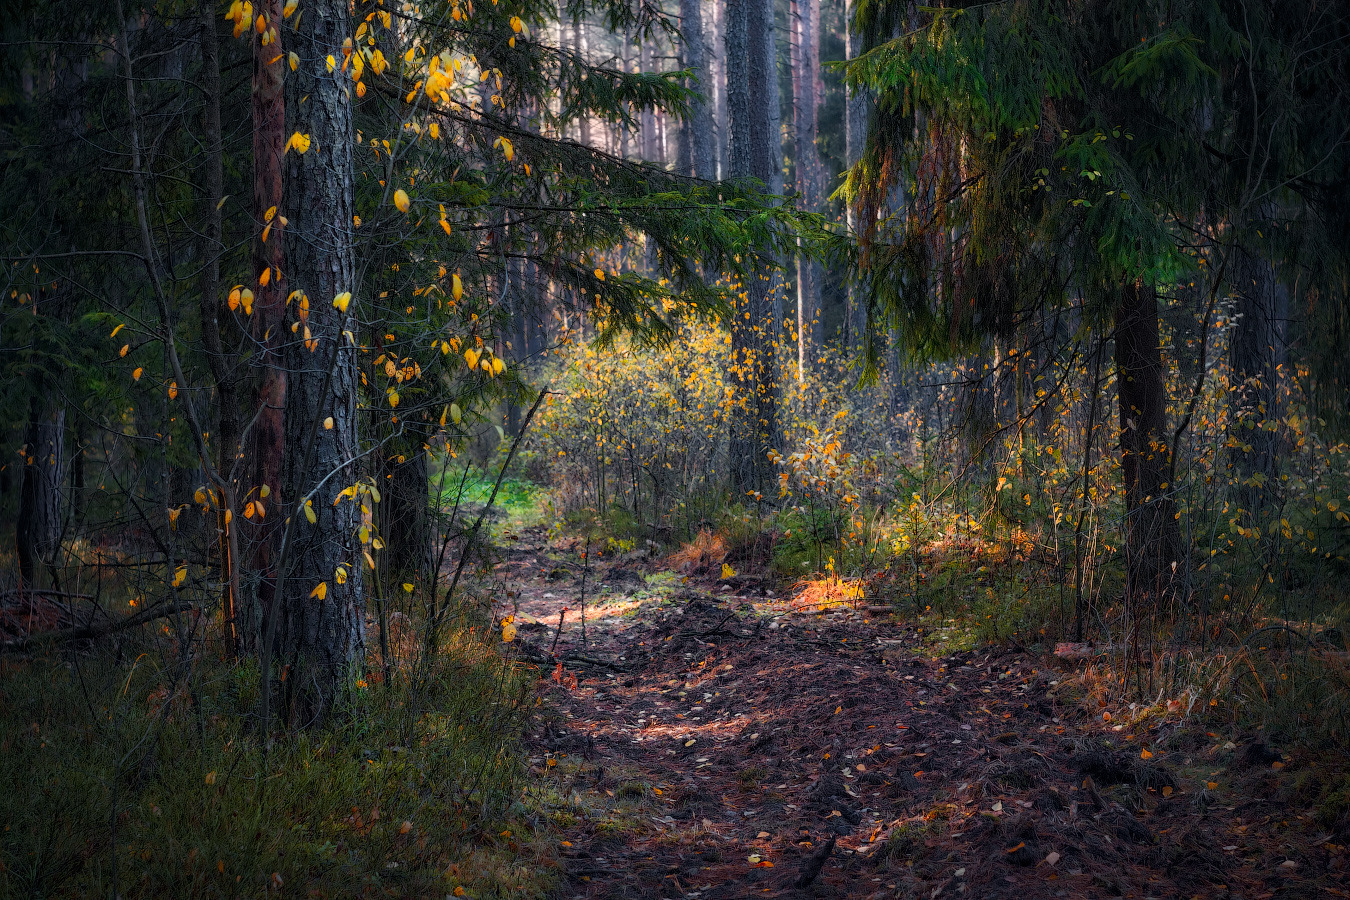 В осеннем лесу | Фотограф Сергей Шабуневич | foto.by фото.бай